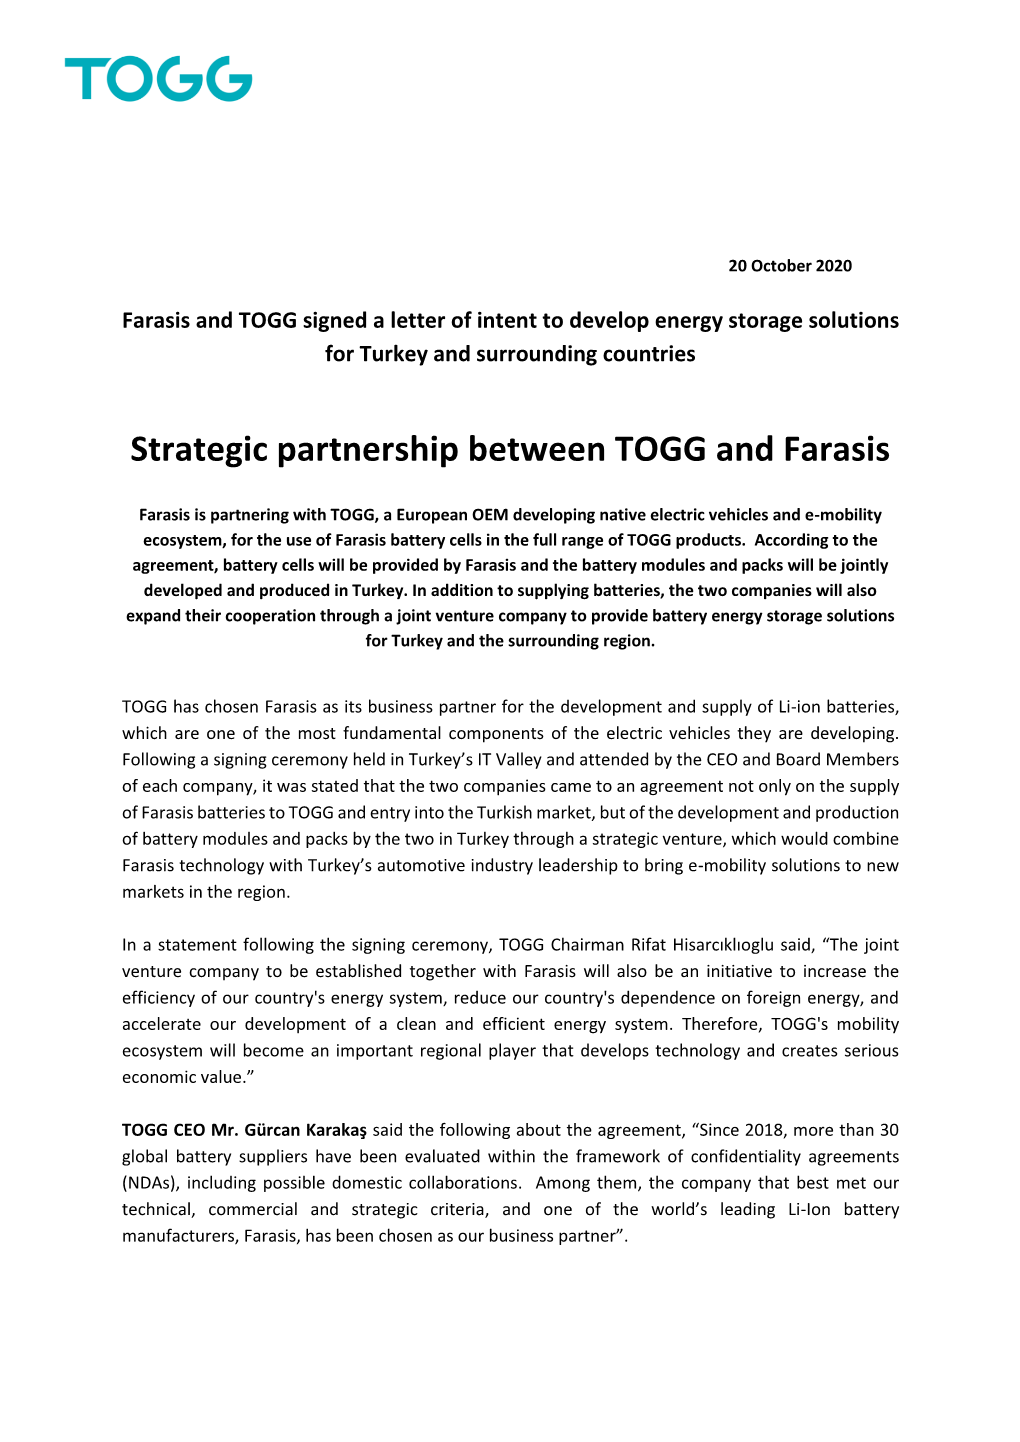 Strategic Partnership Between TOGG and Farasis